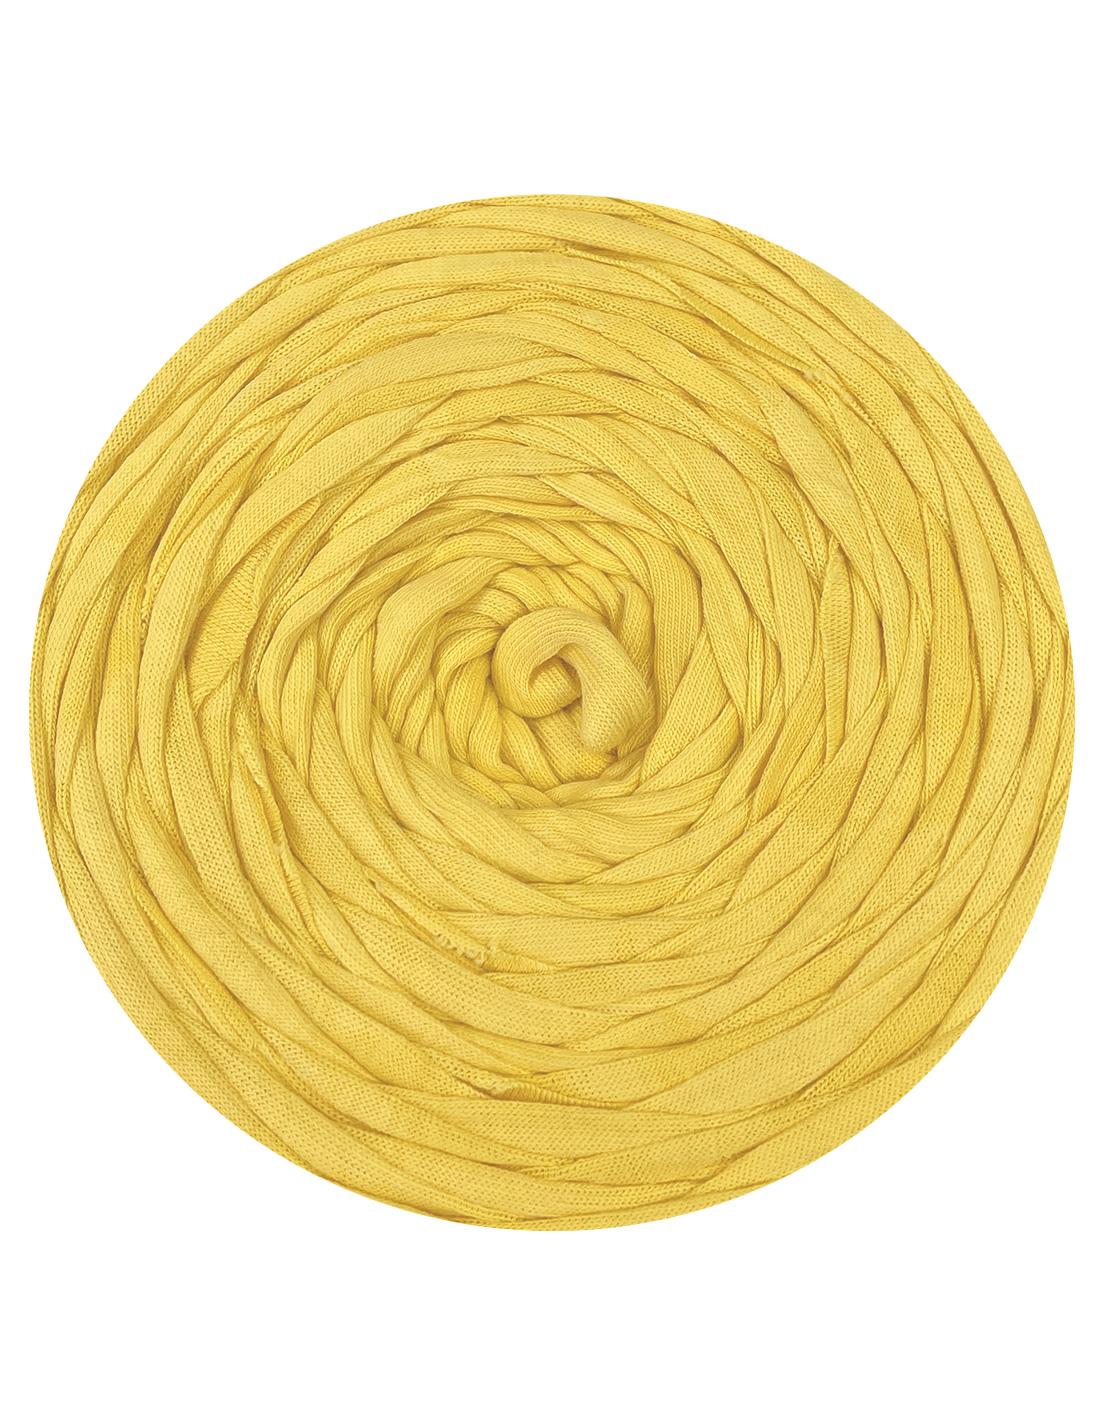 Bright butter yellow t-shirt yarn (100-120m)